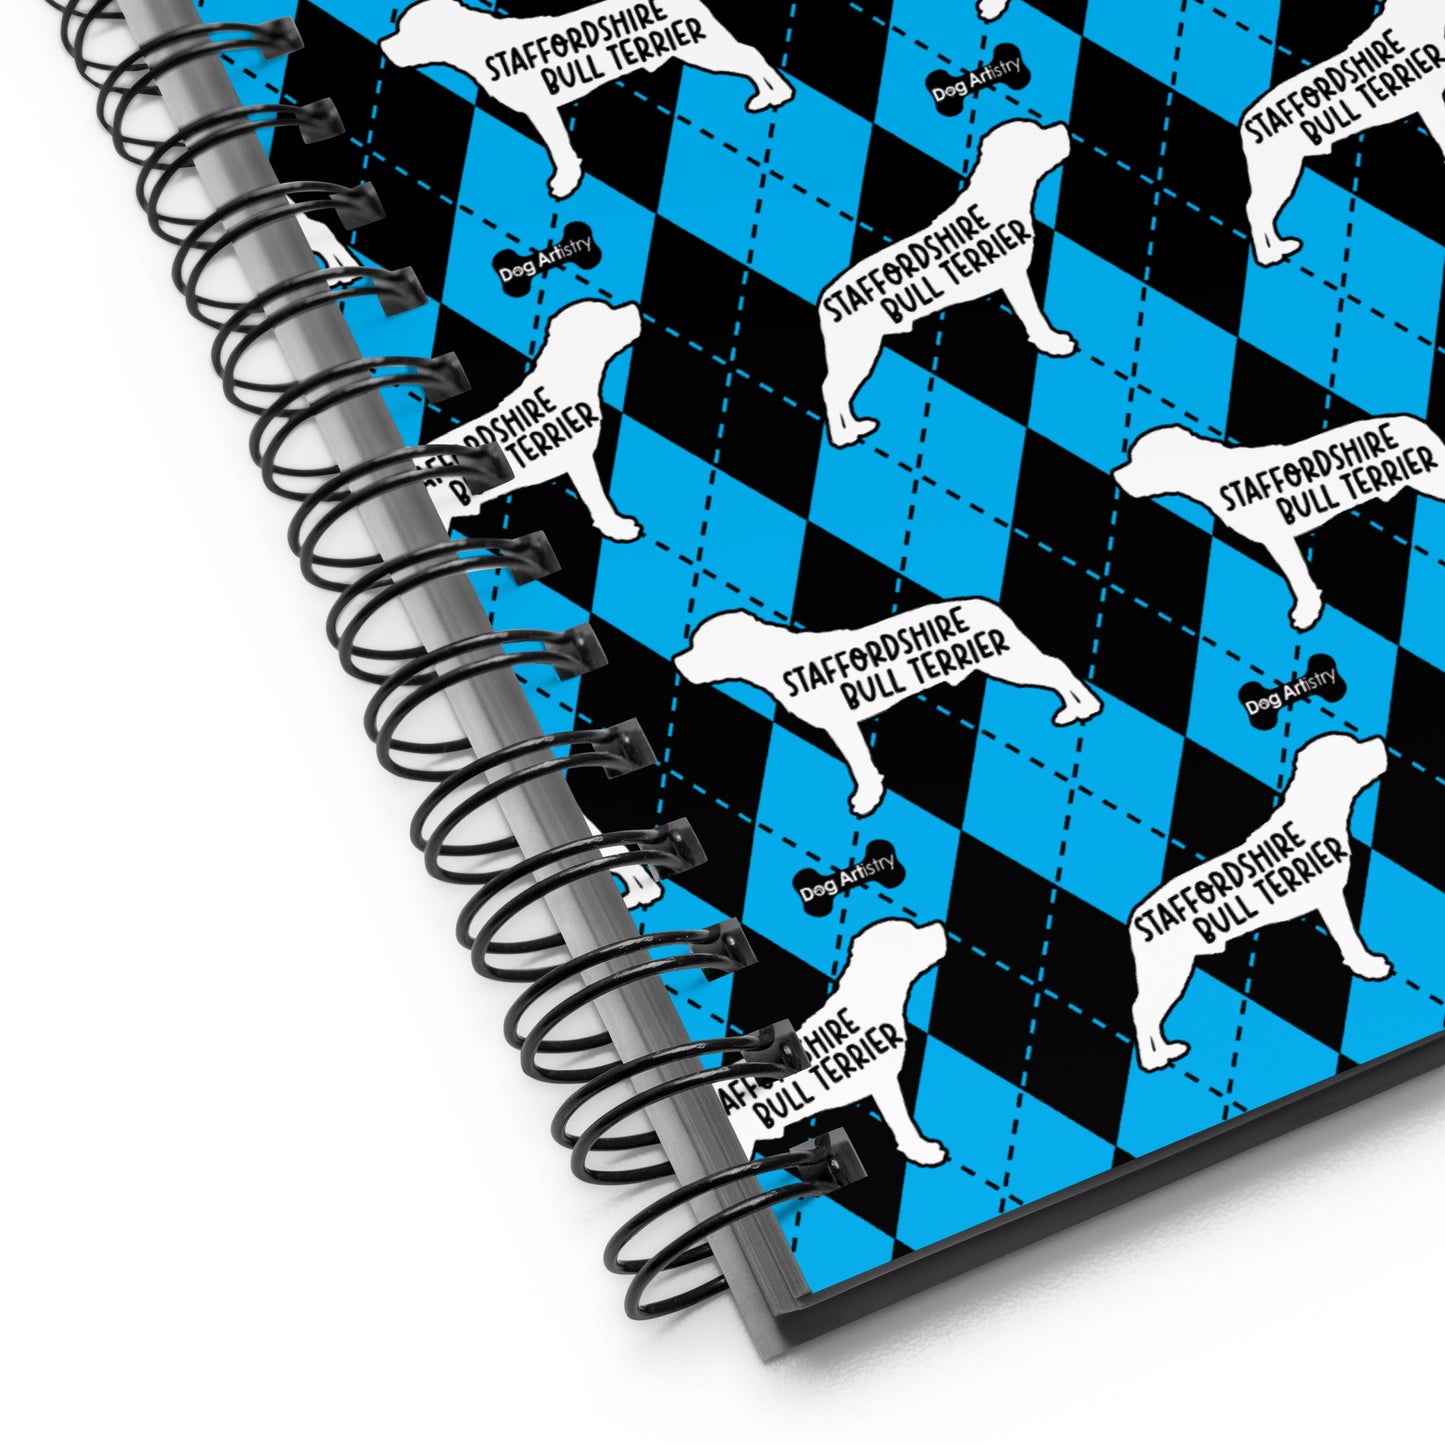 Staffordshire Bull Terrier Argyle Blue and Black Spiral Notebooks